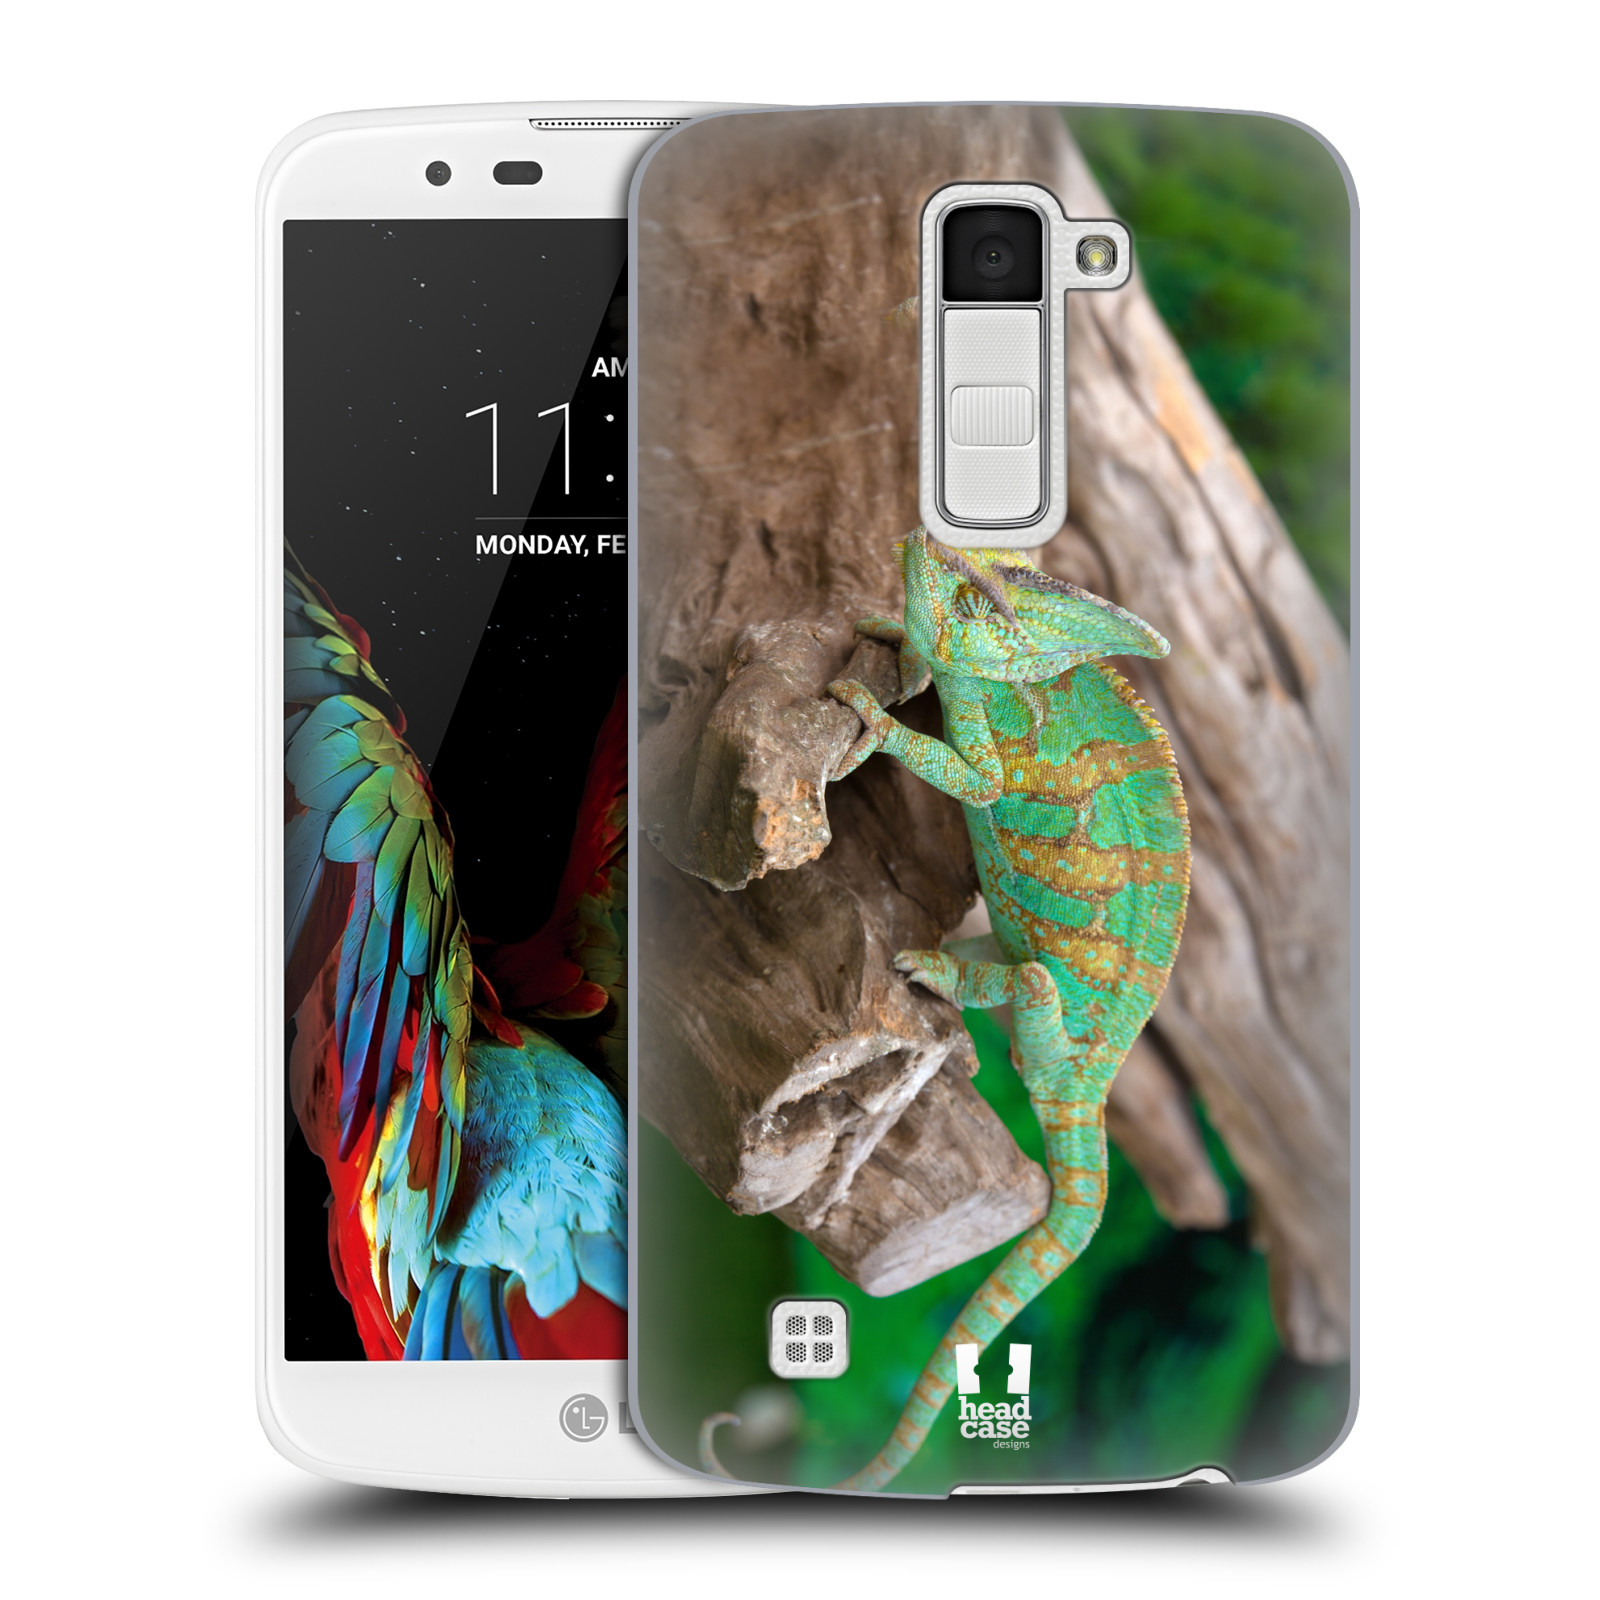 HEAD CASE plastový obal na mobil LG K10 vzor slavná zvířata foto chameleon